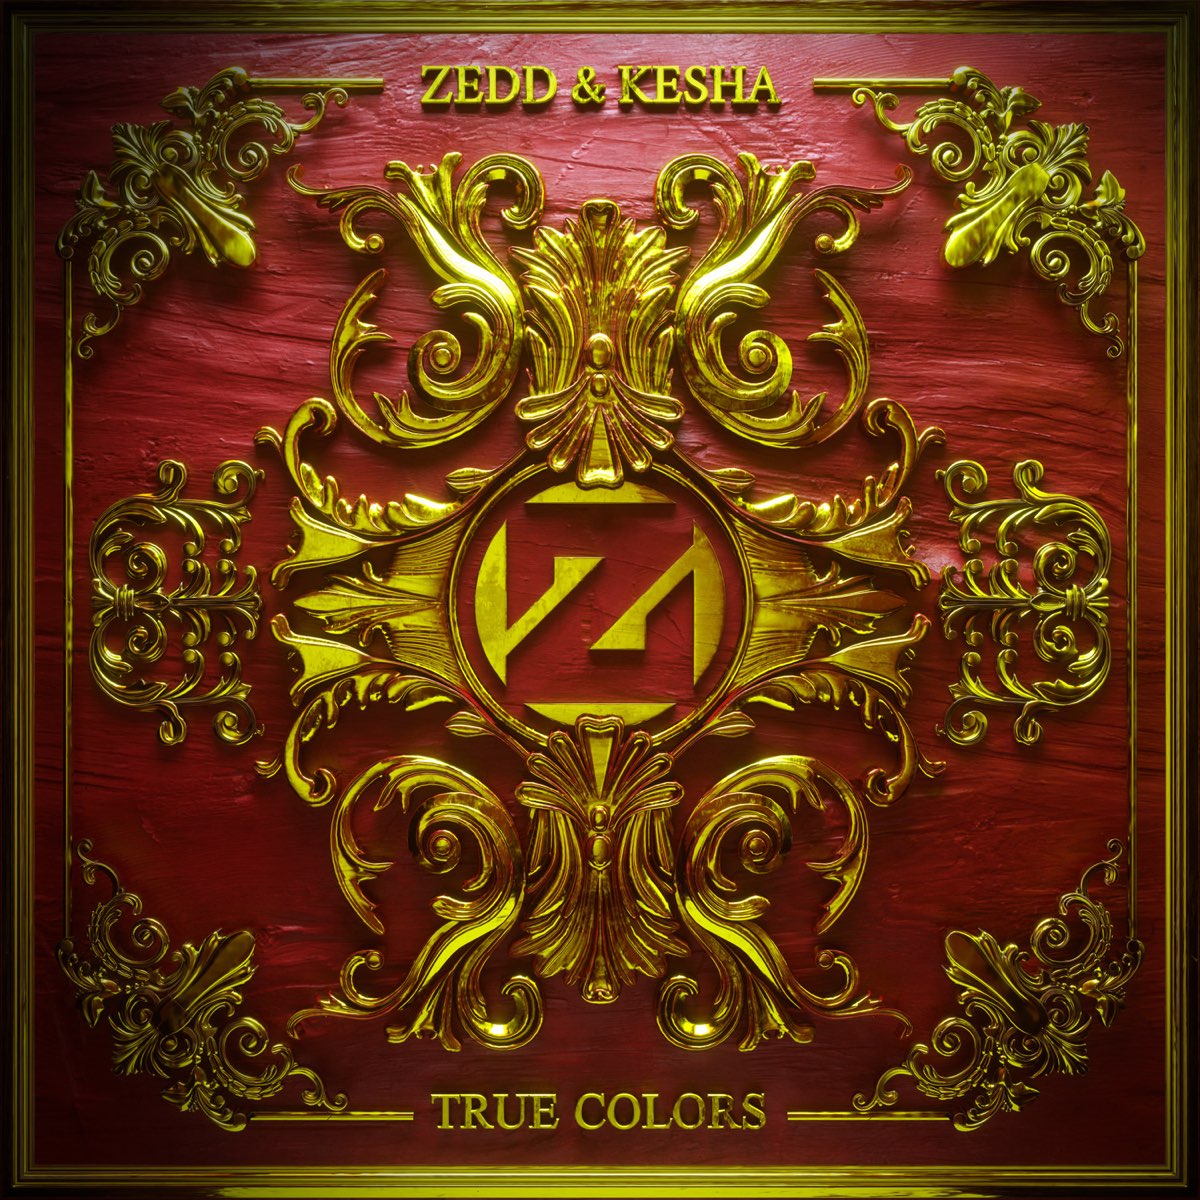 Zedd & Kesha True Colors cover artwork